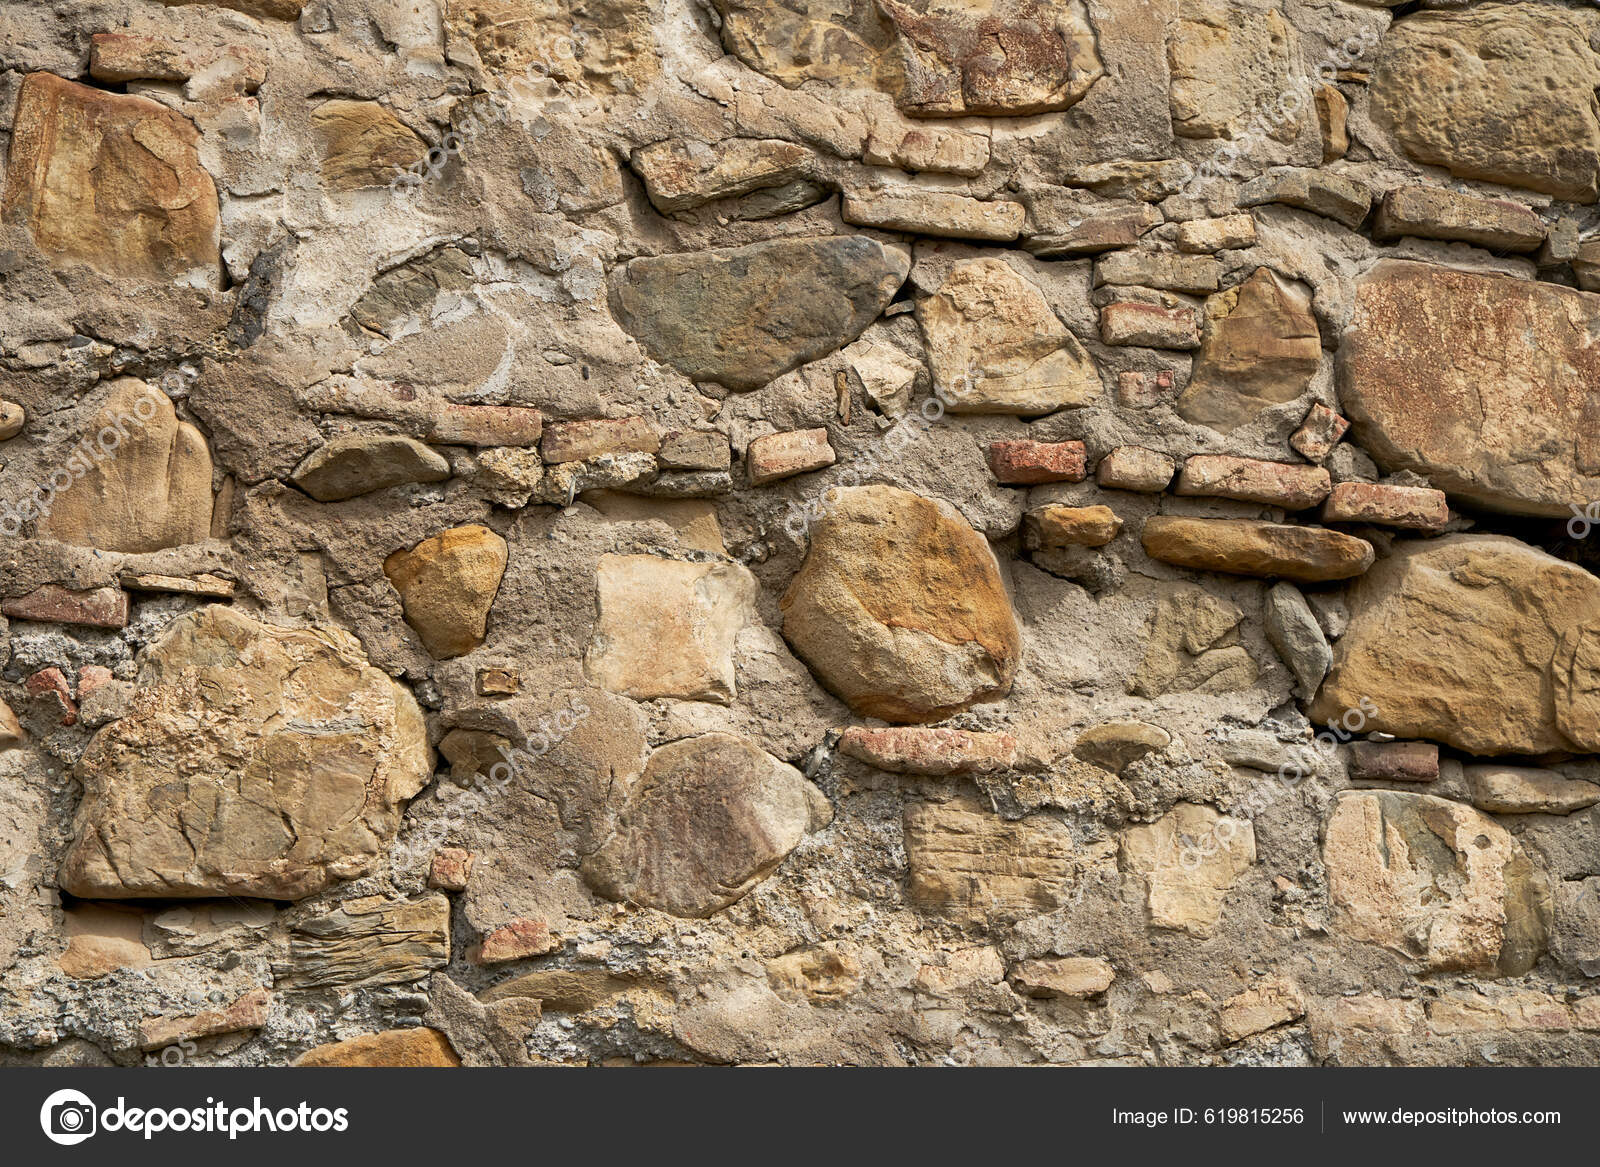 Muro de Pedras